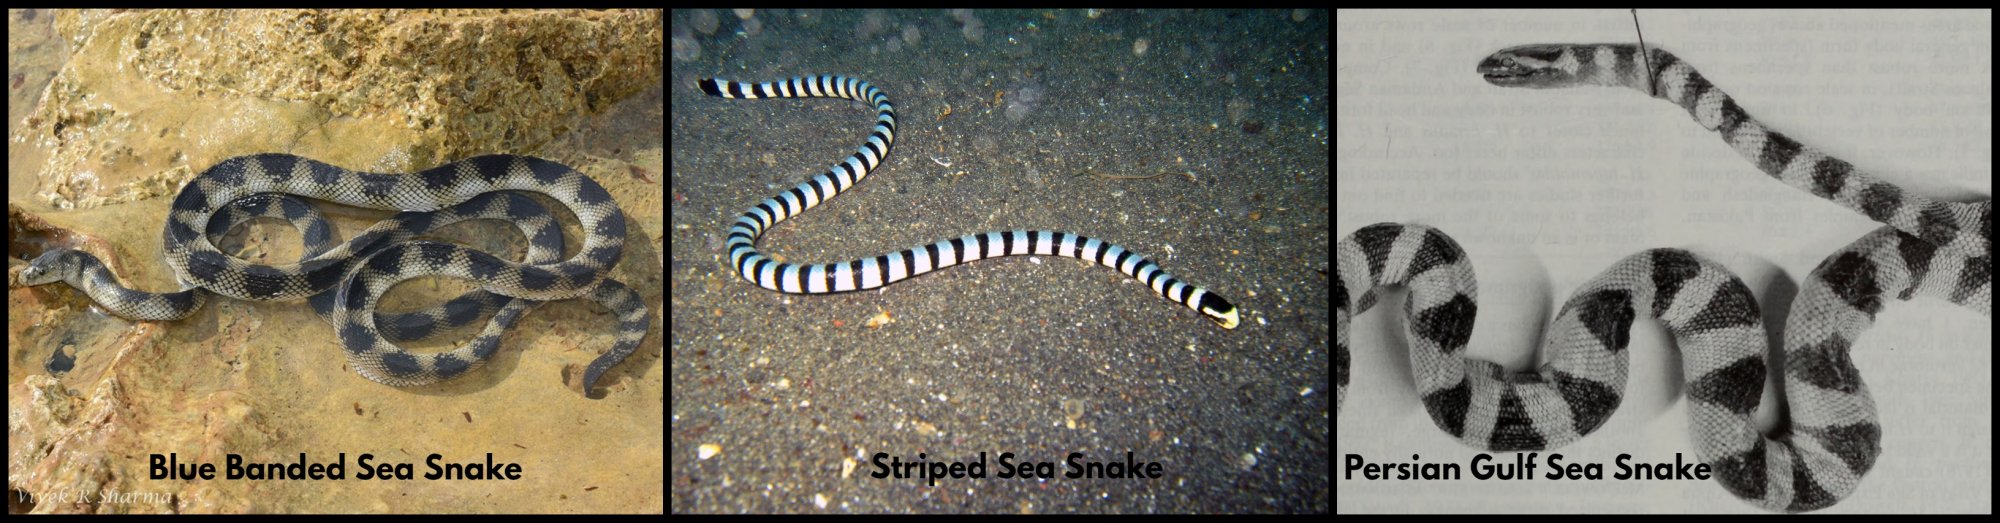 Sea Snake 2.jpg